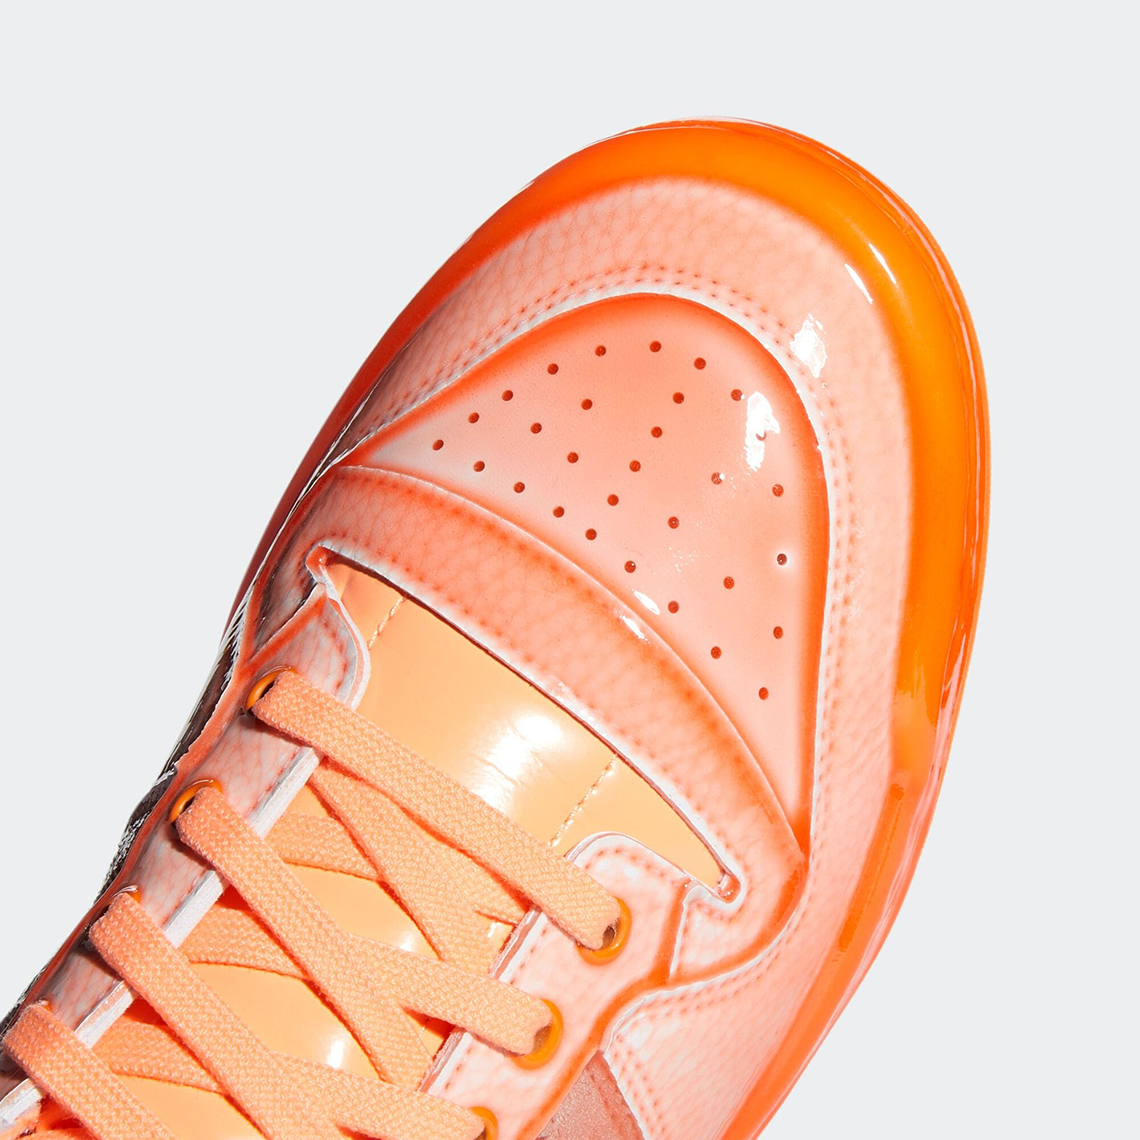 Jeremy Scott Adidas Forum Hi Dipped Orange Q46124 4